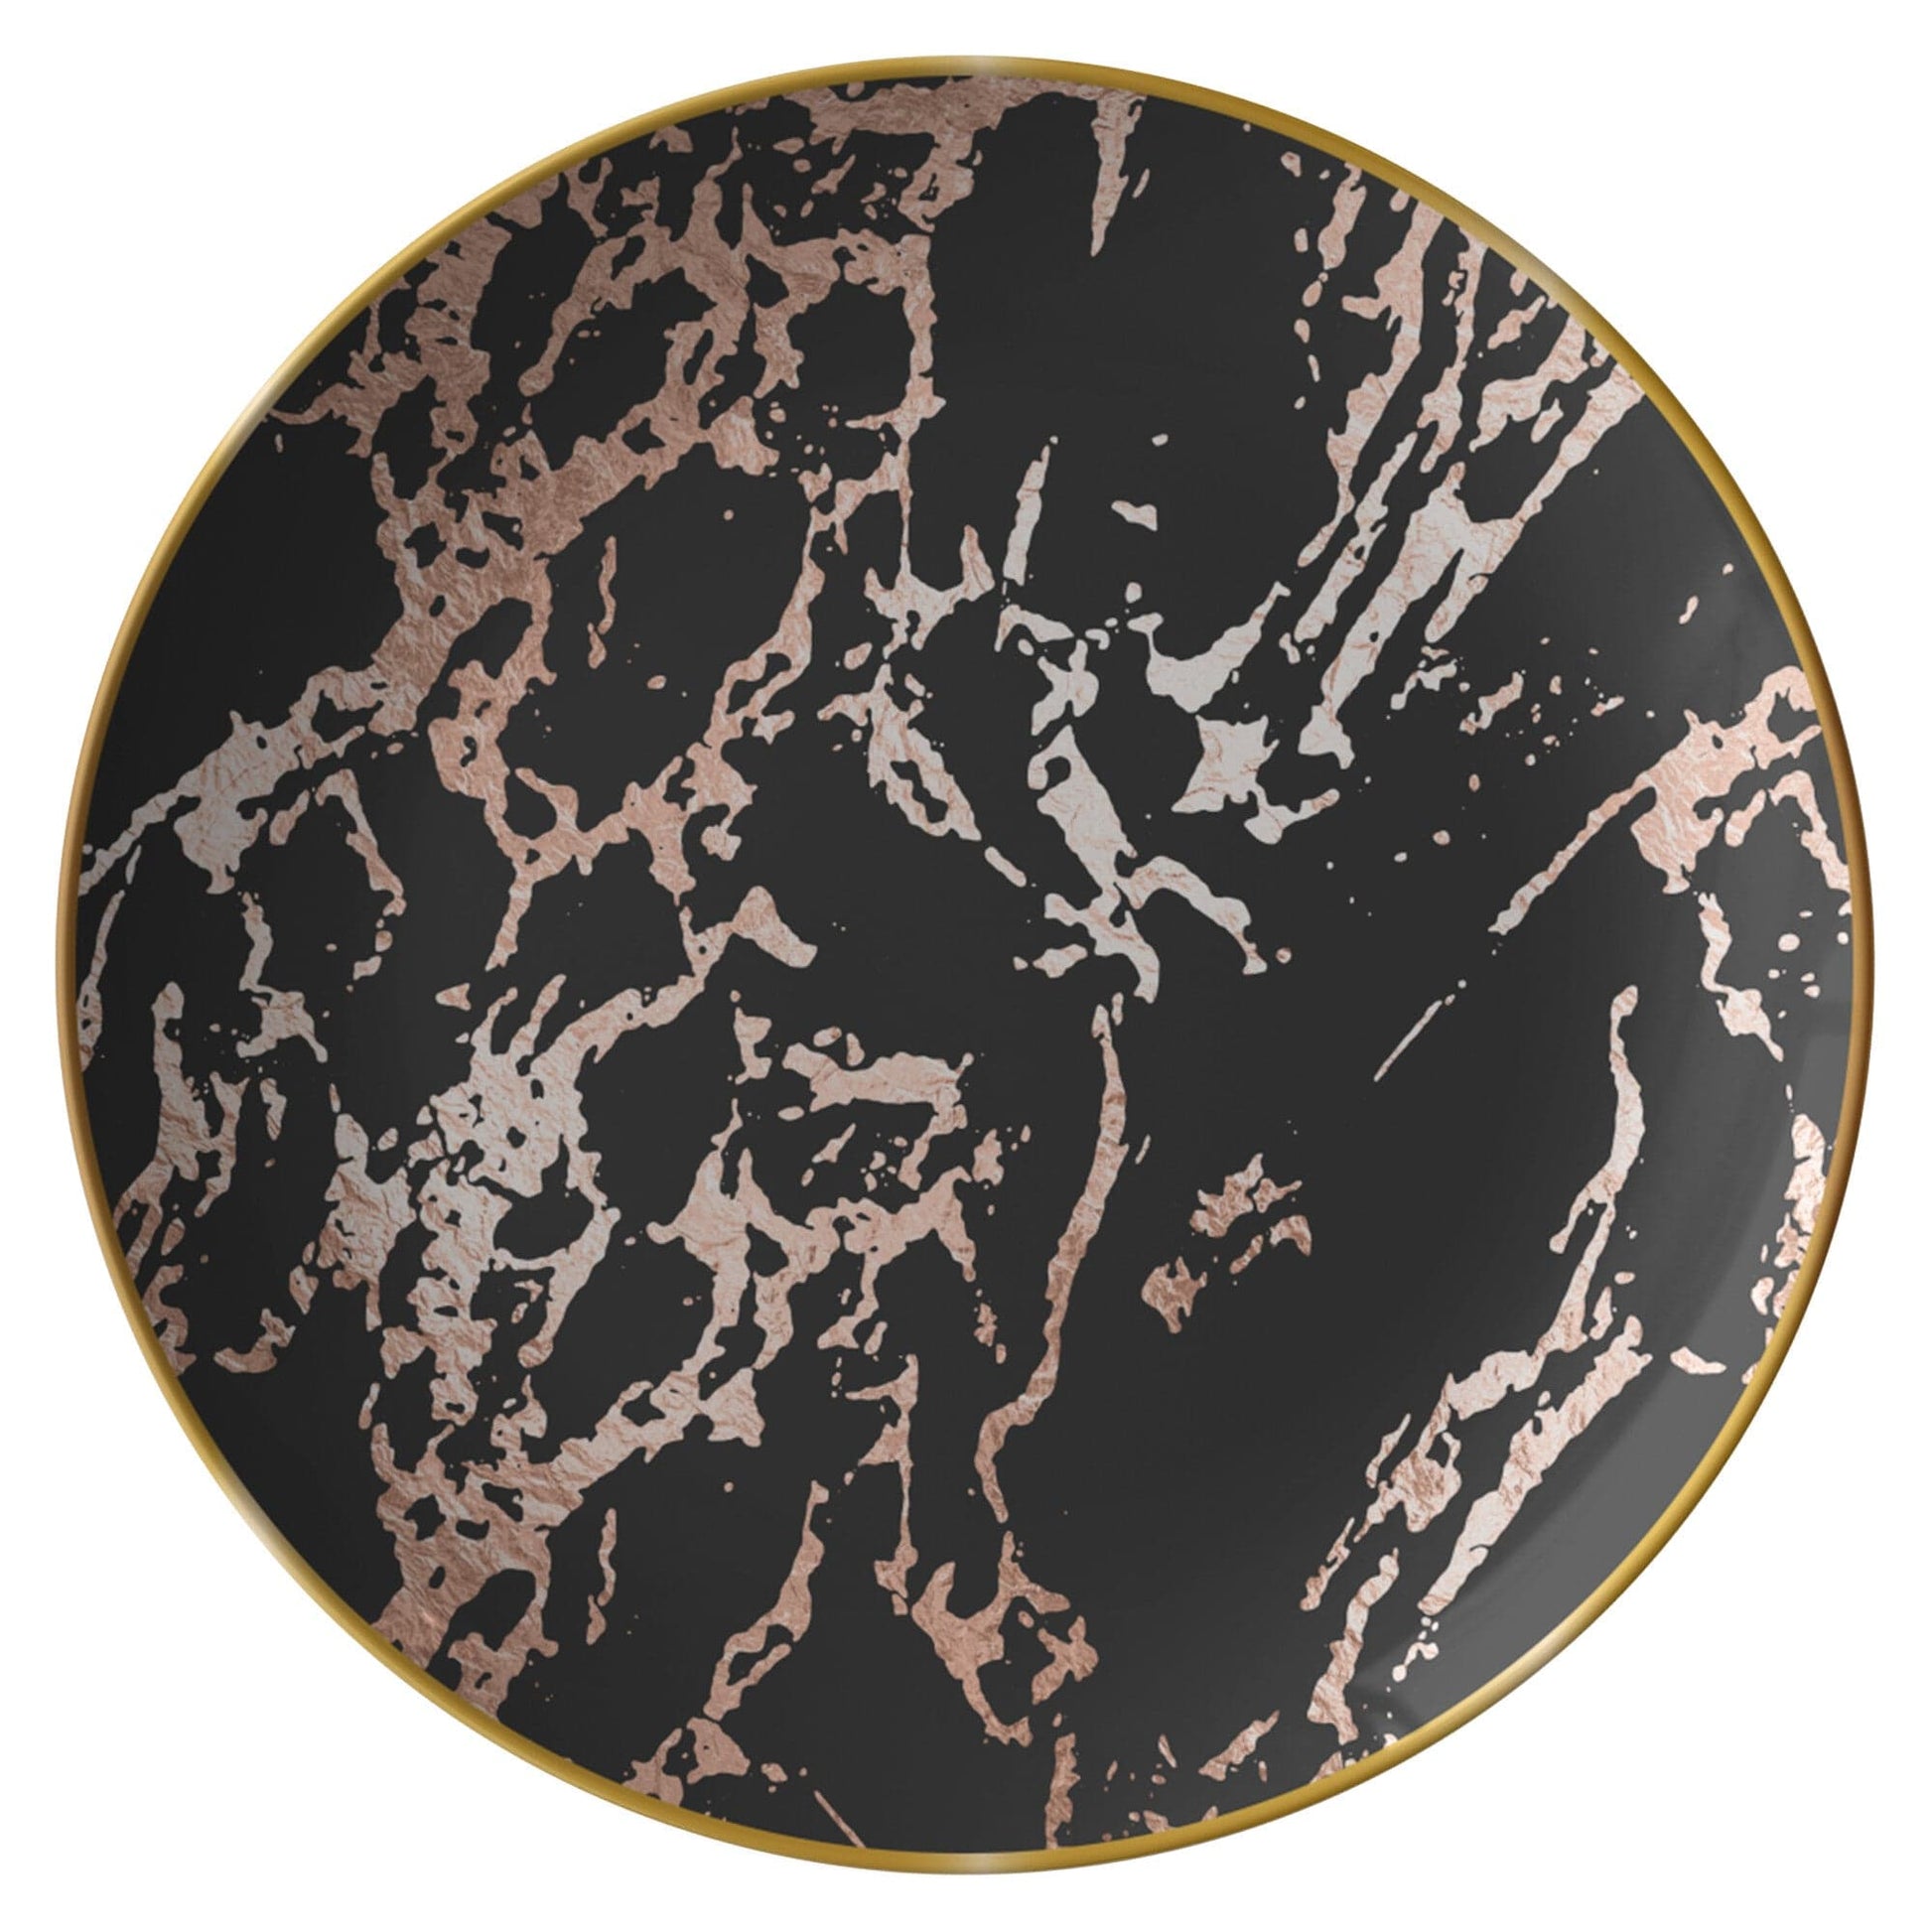 Kate McEnroe New York Marble Dinner Plate in Black Blush with Gold Rim Plates